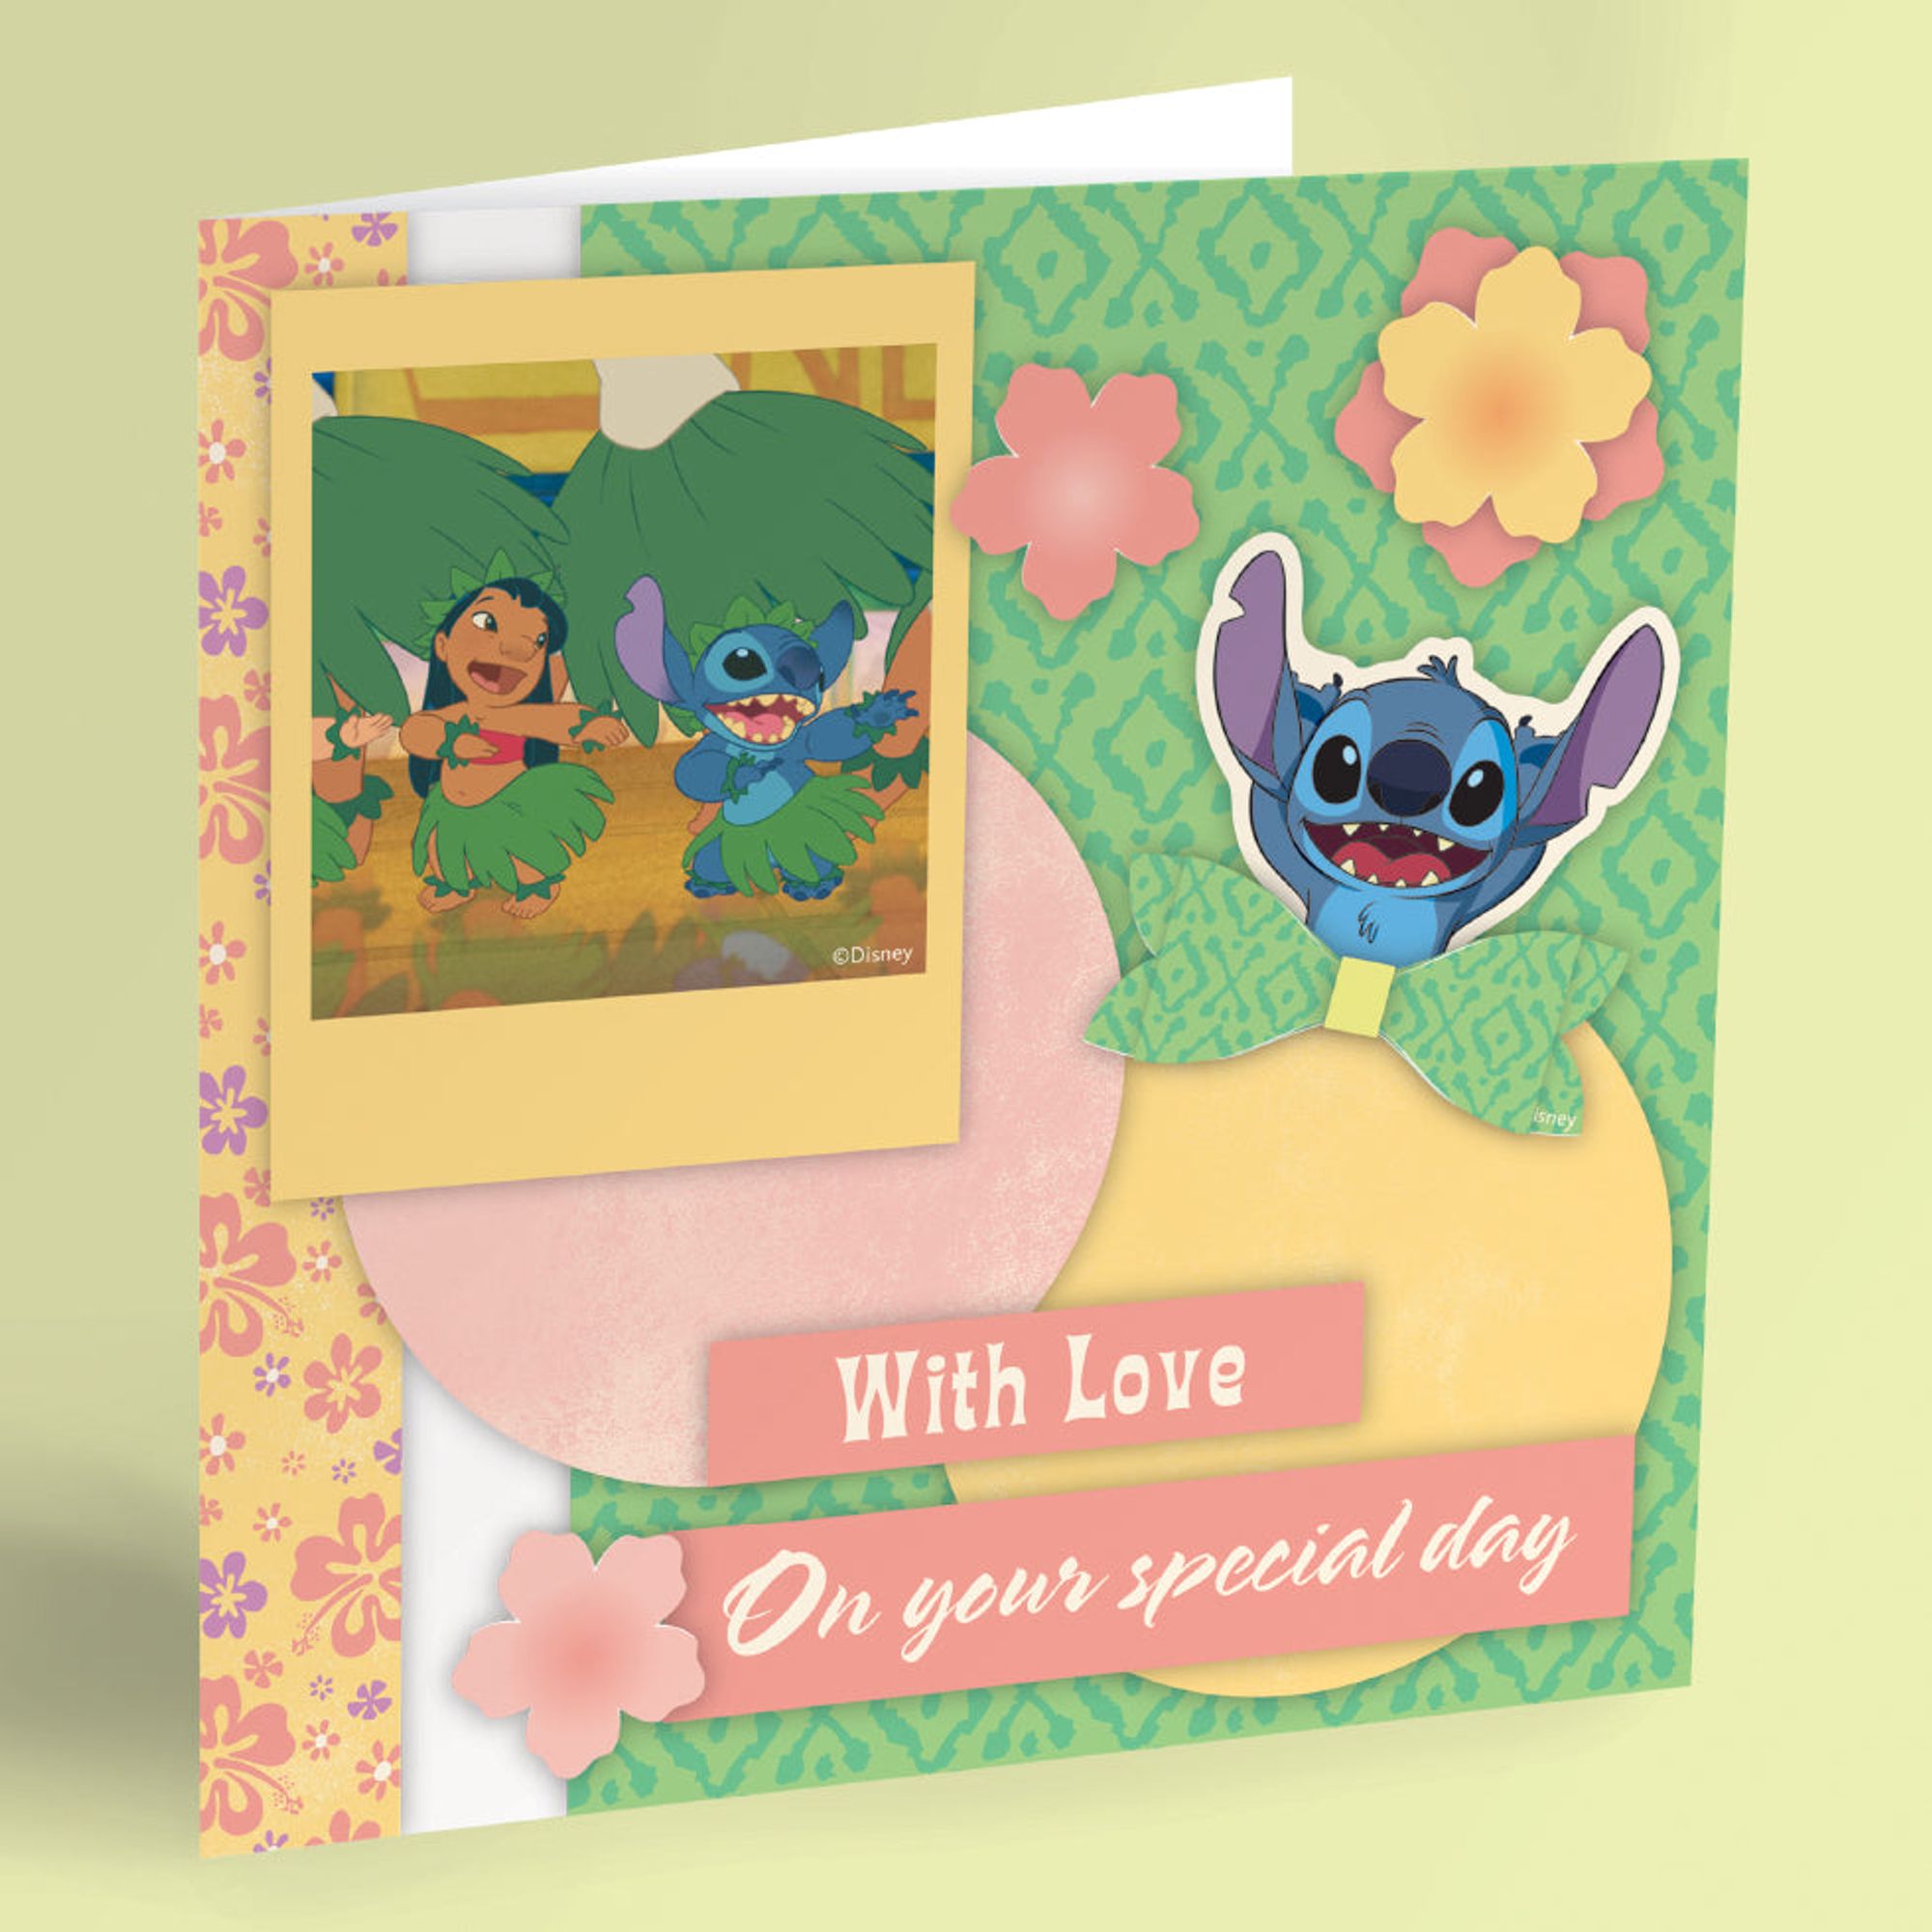 Creative World of Crafts - 8 x 8 Card Making Kit - Lilo and Stitch